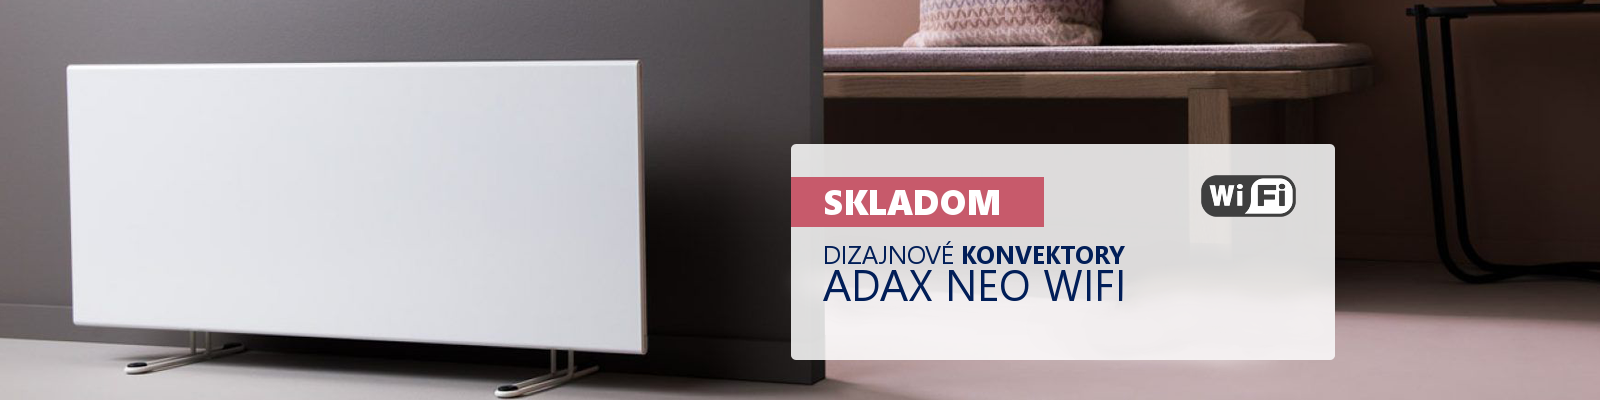 Adax Neo WiFi